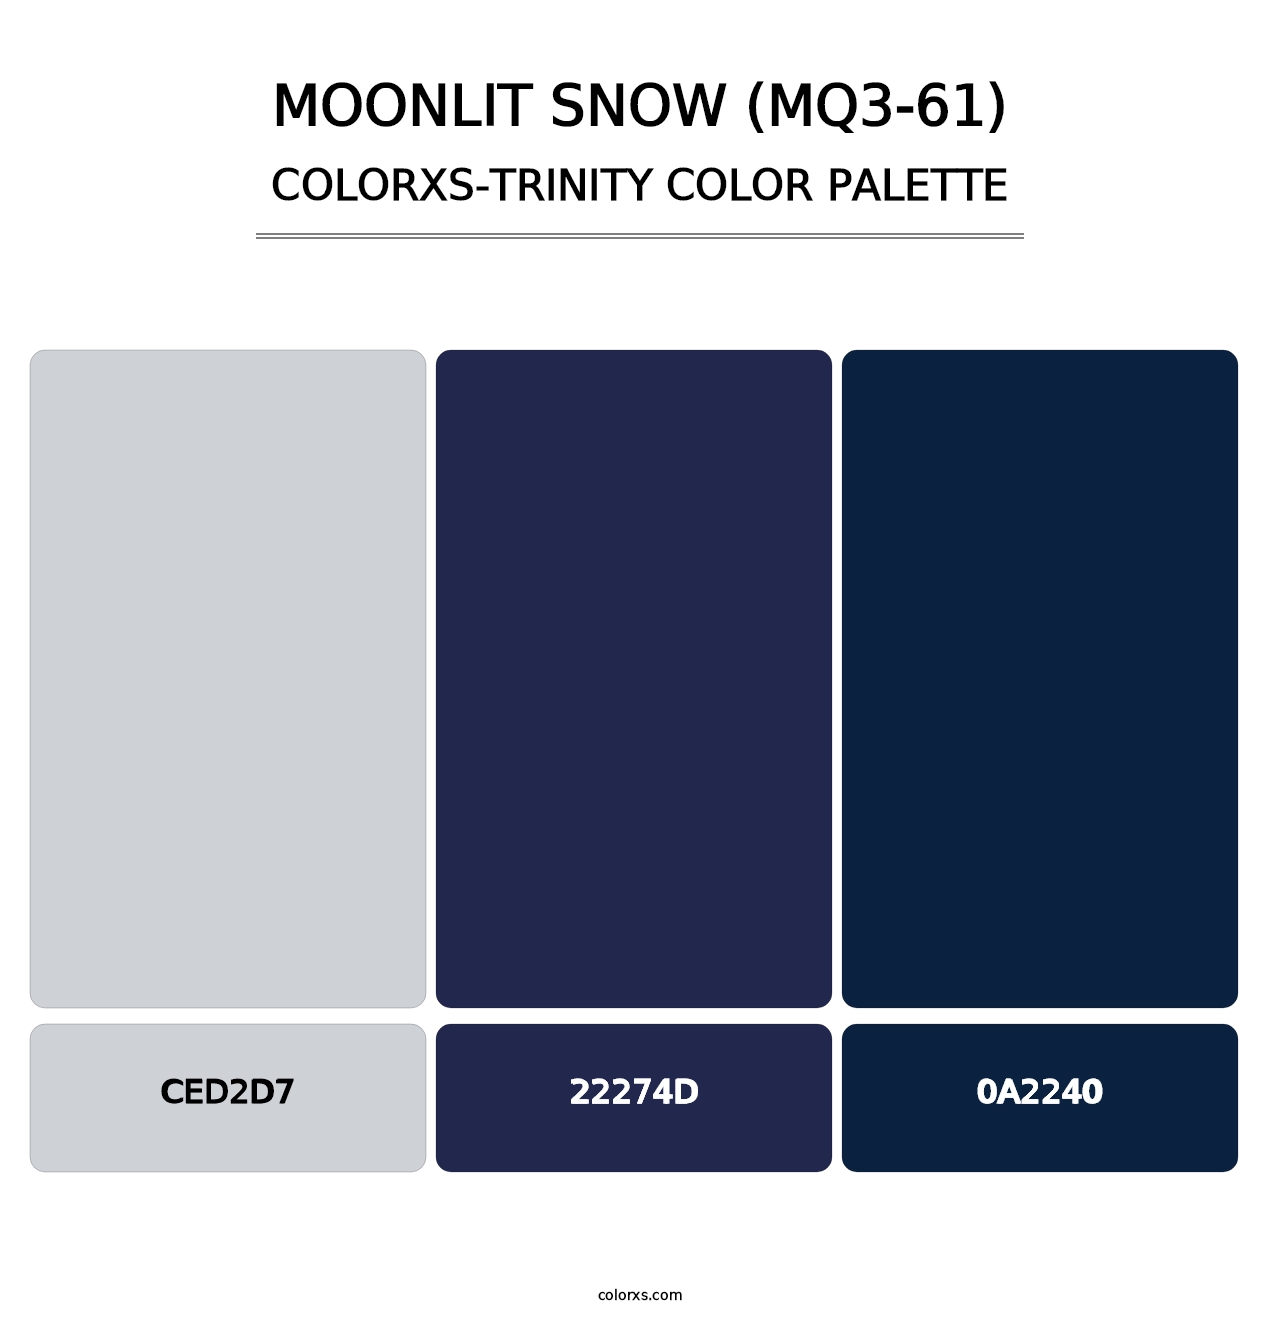 Moonlit Snow (MQ3-61) - Colorxs Trinity Palette